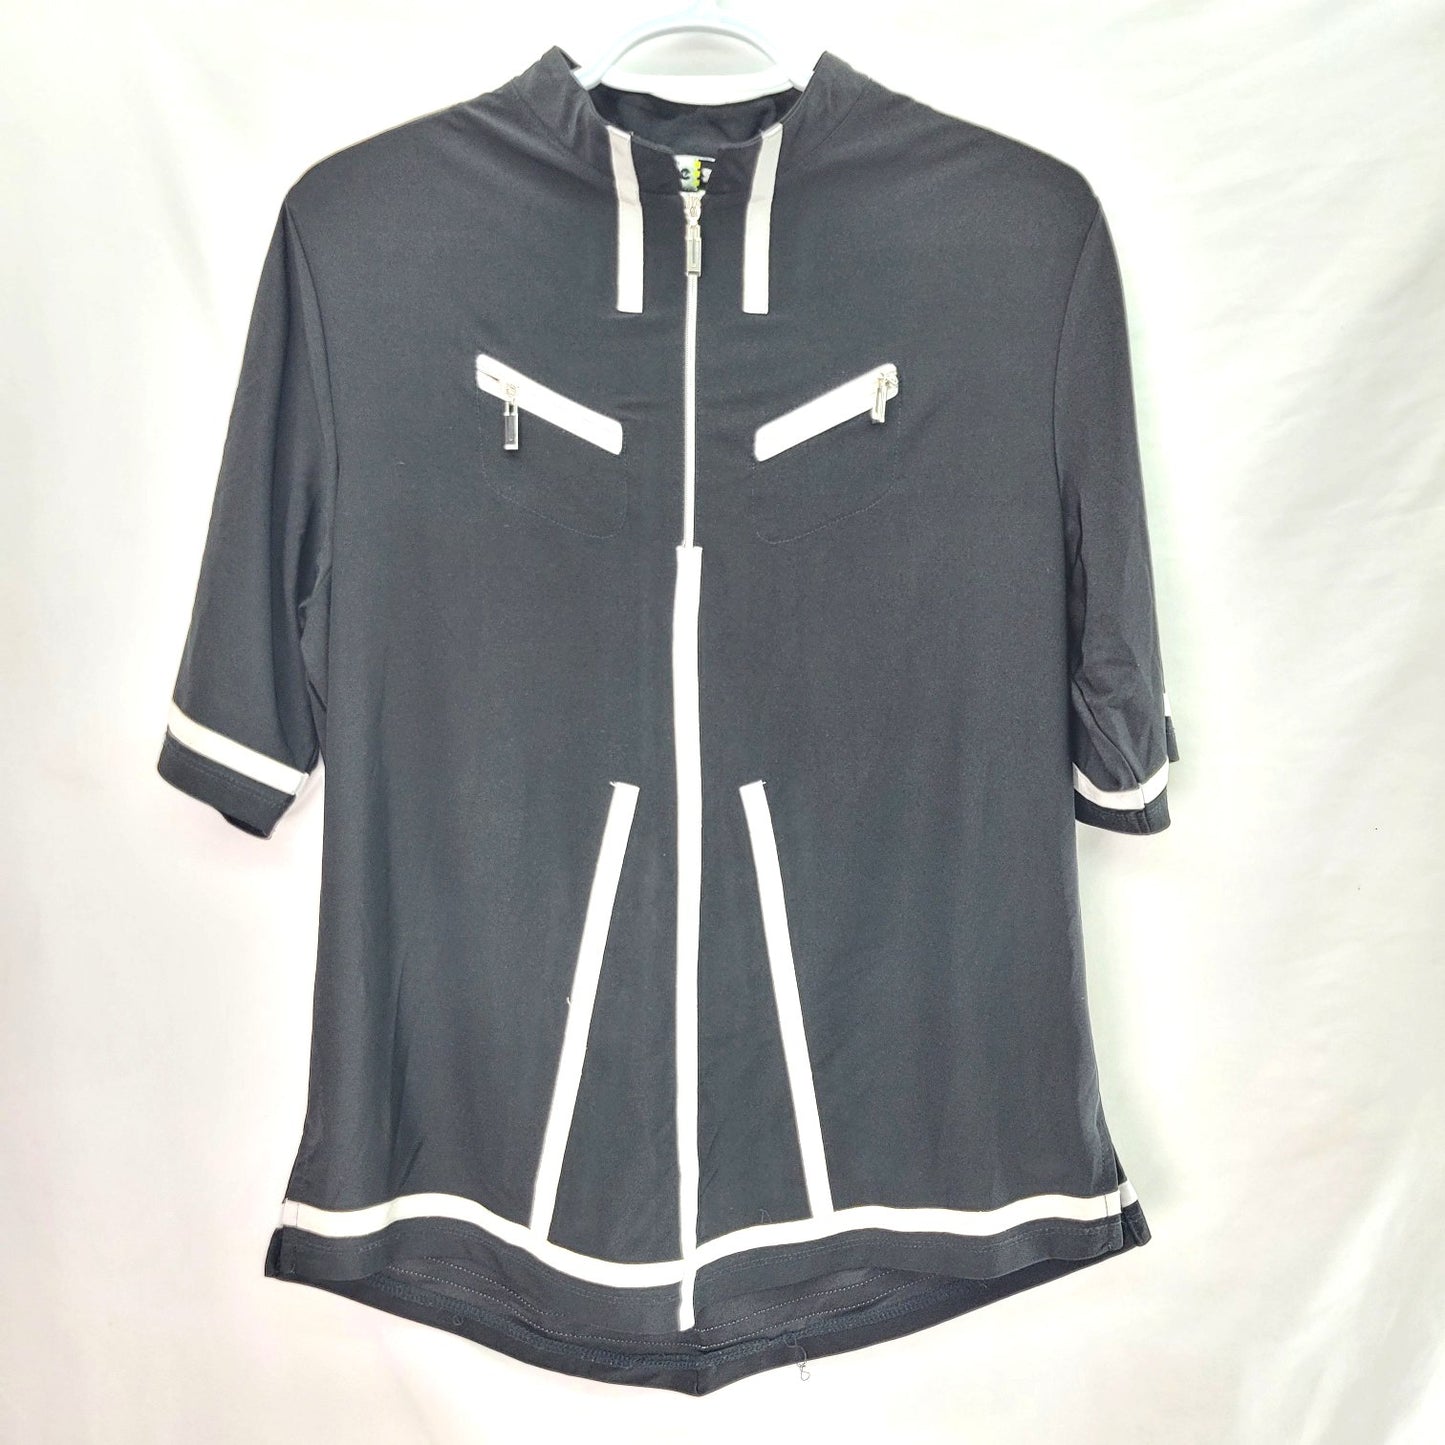 Jamie Sadock Women's Zip-up Shirt Black - XL